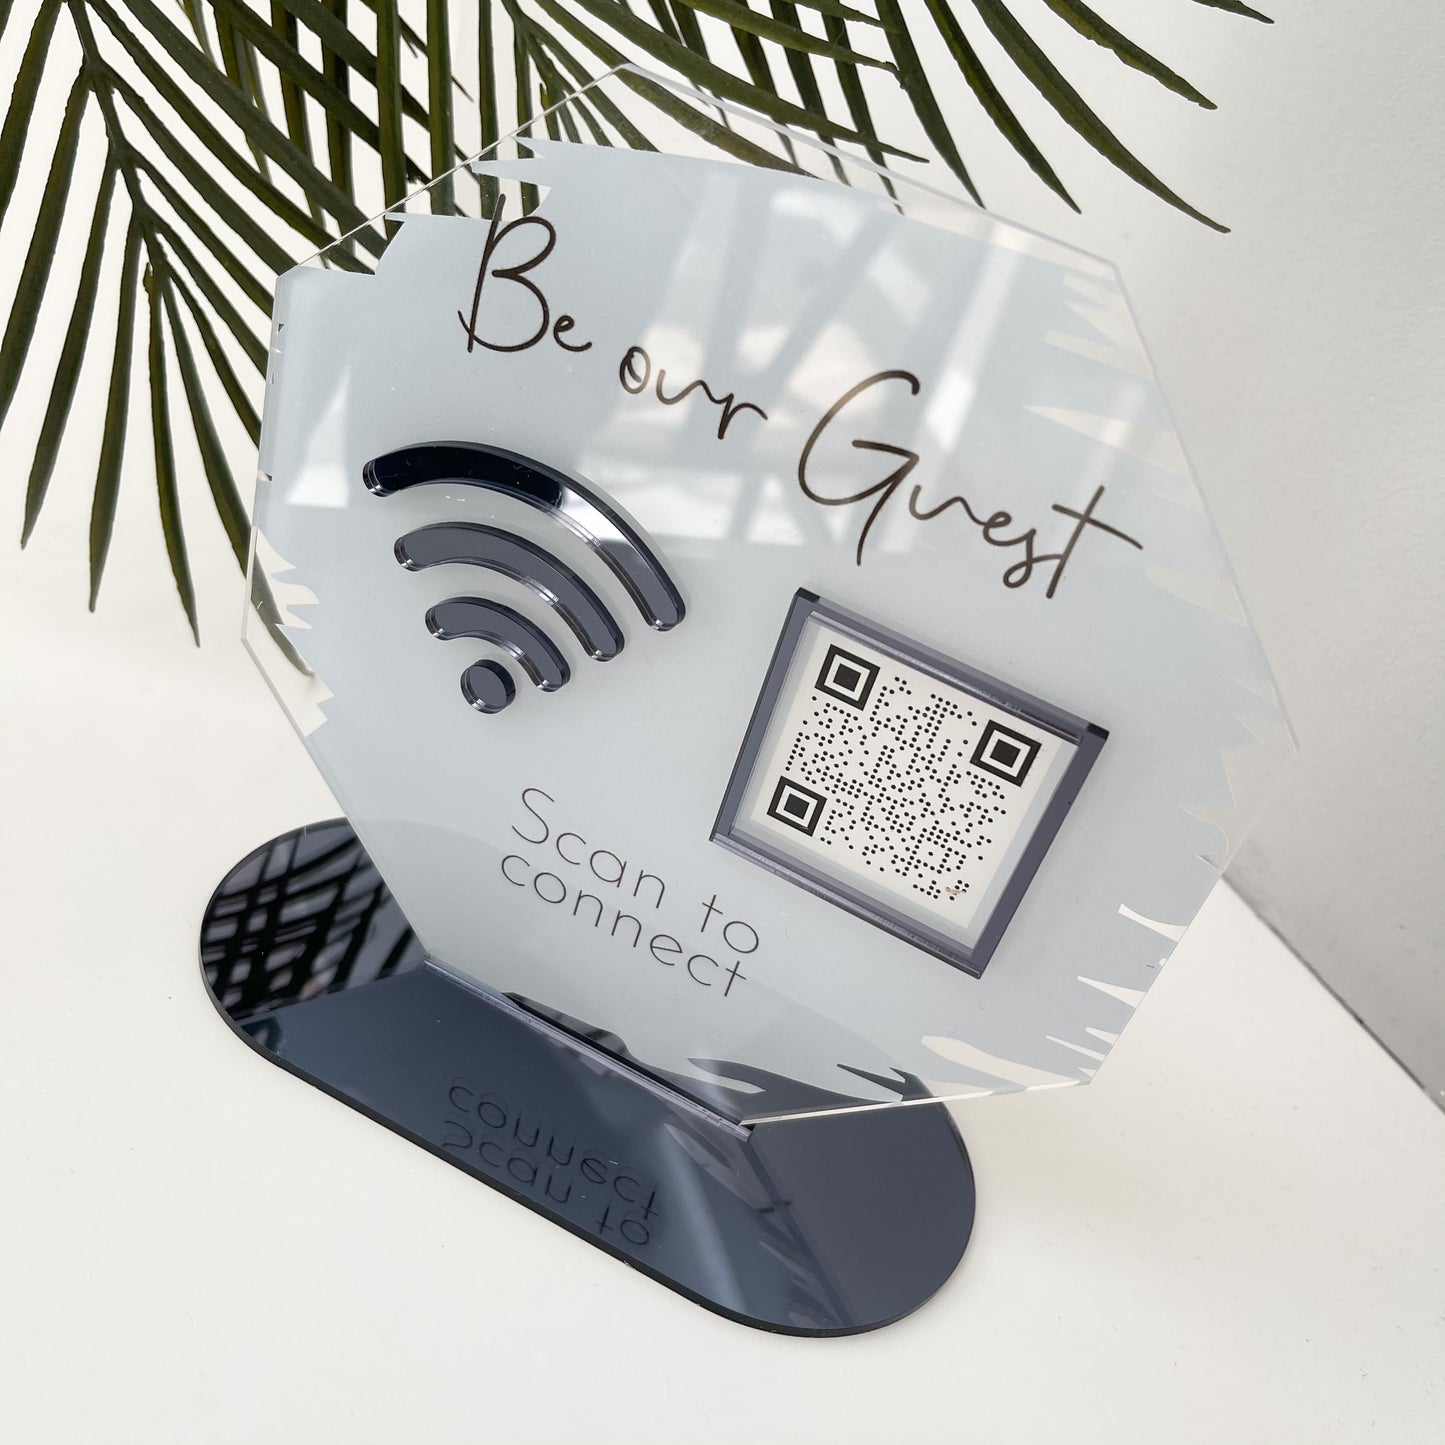 QR Connect WiFi Sign - V&C Designs Ltd